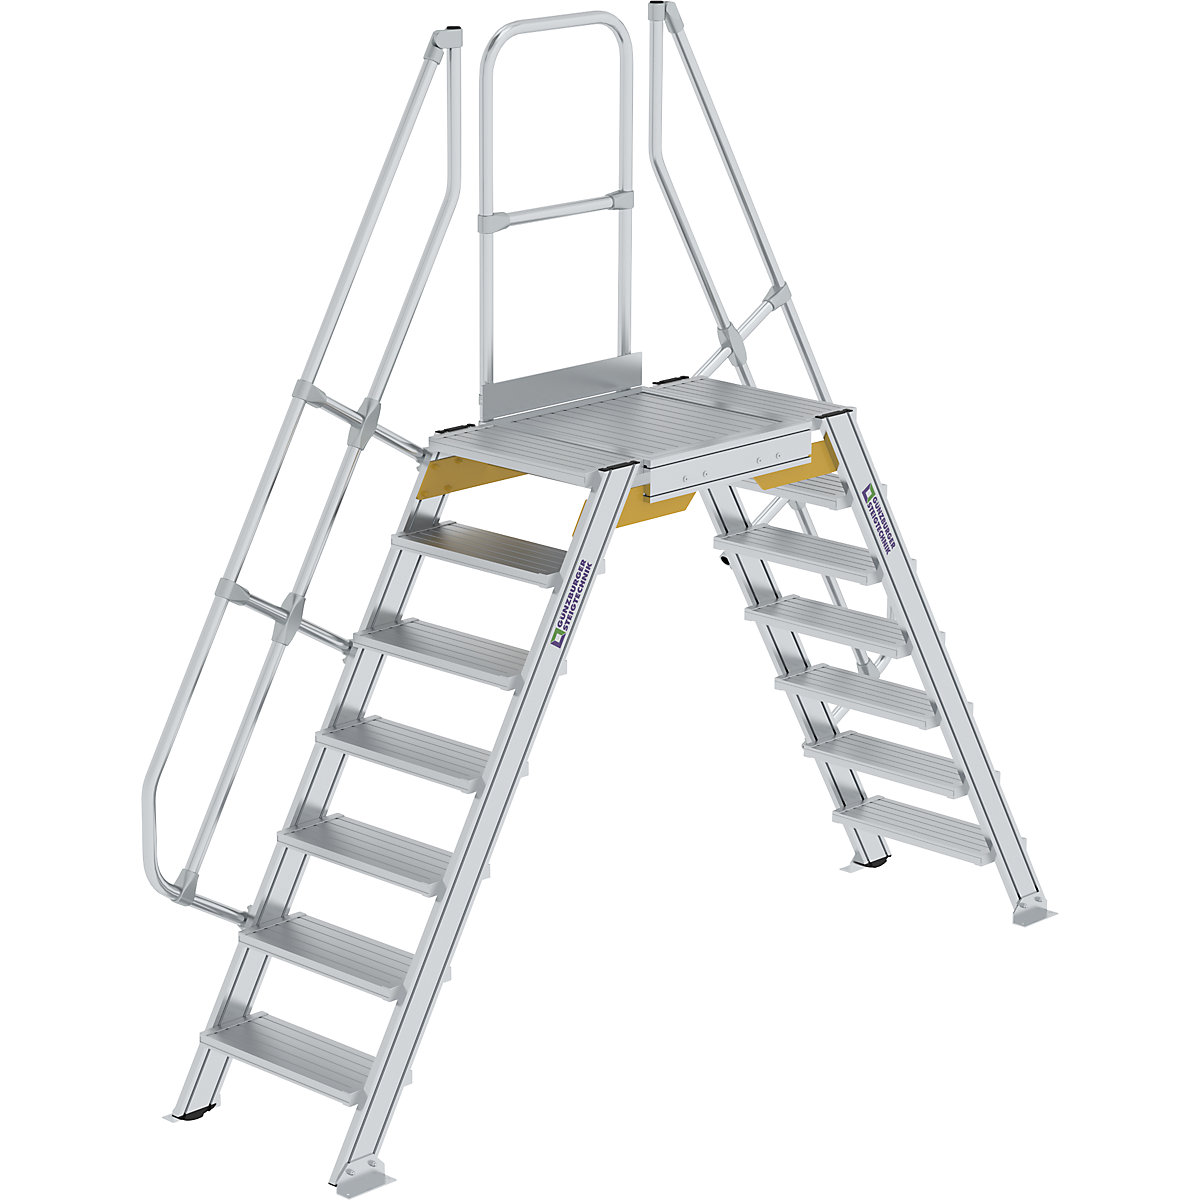 Premostitvena lestev – MUNK, skupna nosilnost 300 kg, 7 stopnic, podest 1200 x 600 mm